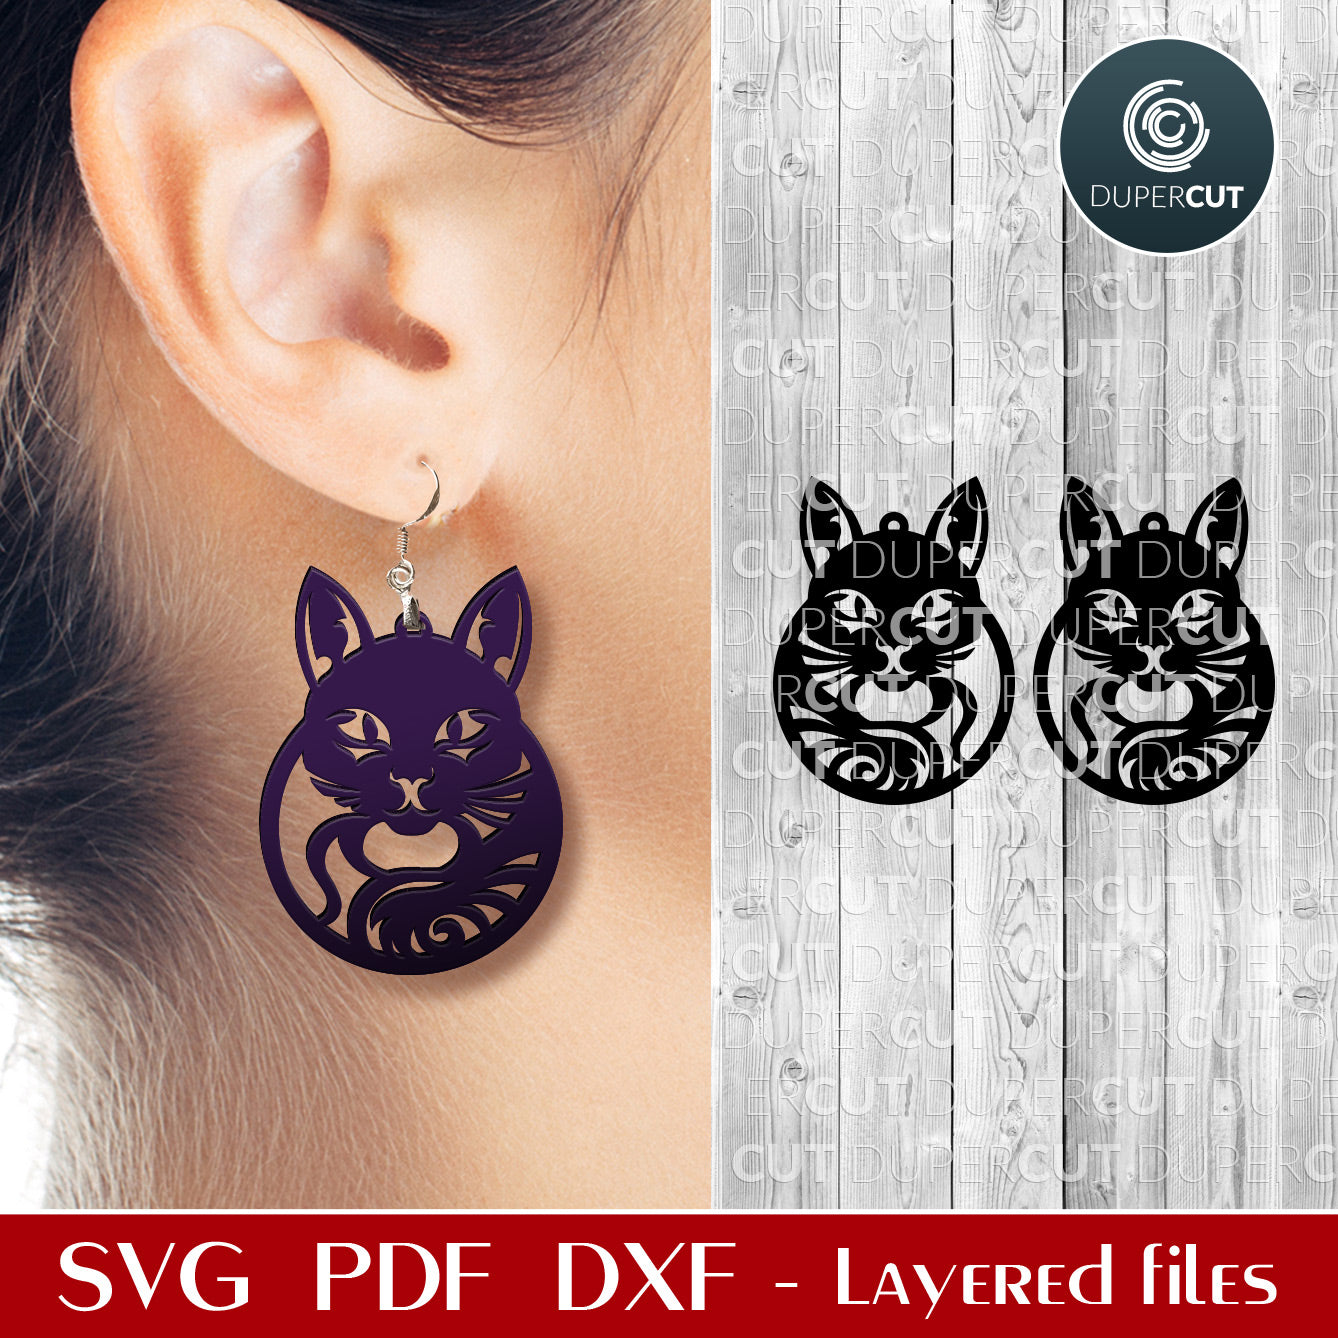 Black cat DIY leather wood Halloween earrings - SVG DXF vector files for laser cutting, Glowforge, Cricut, Silhouette, CNC plasma machines by www.DuperCut.com